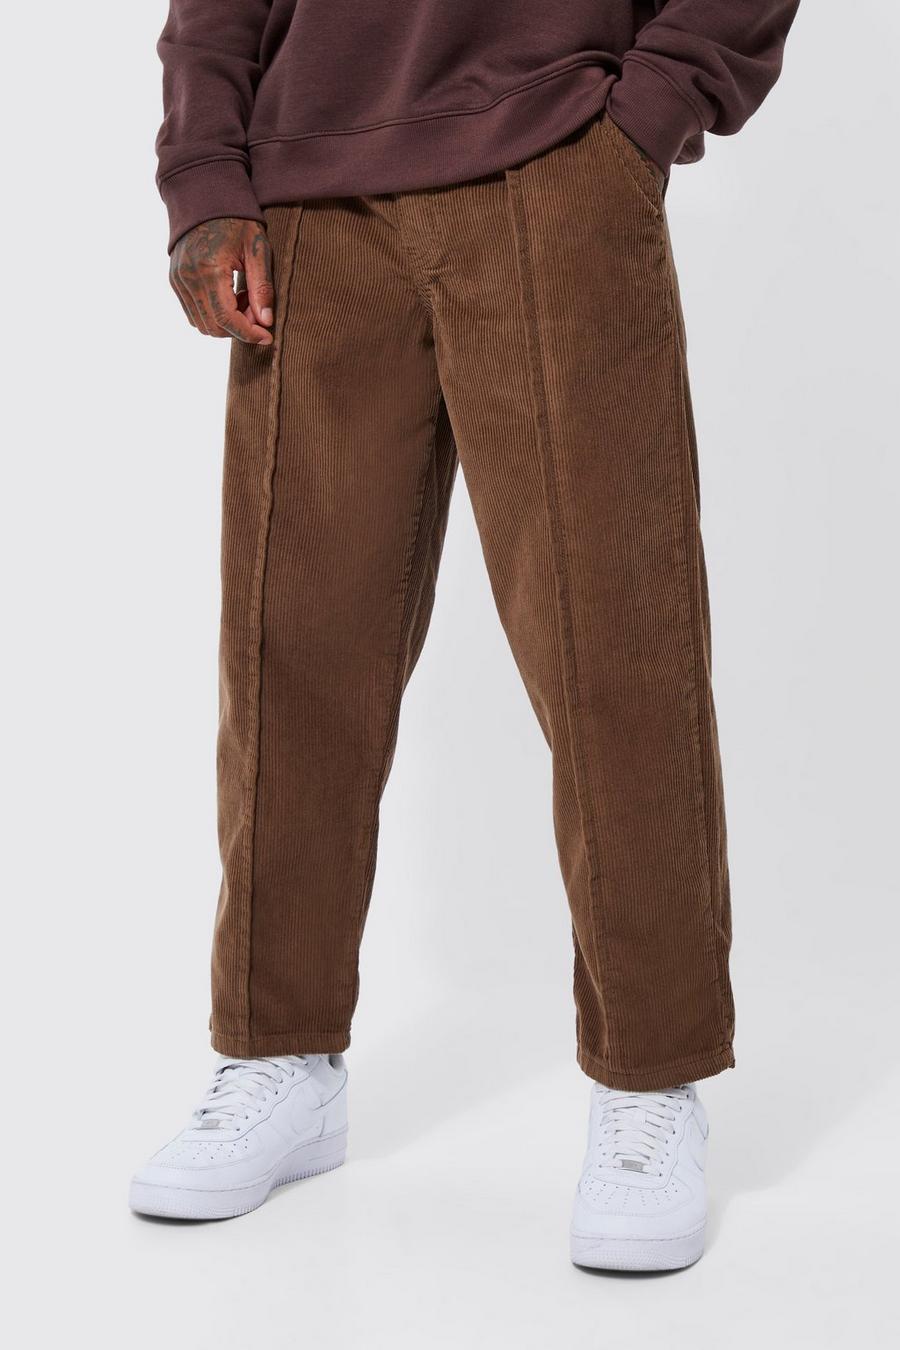 Chocolate marron Cord Skate Trouser With Pintucks